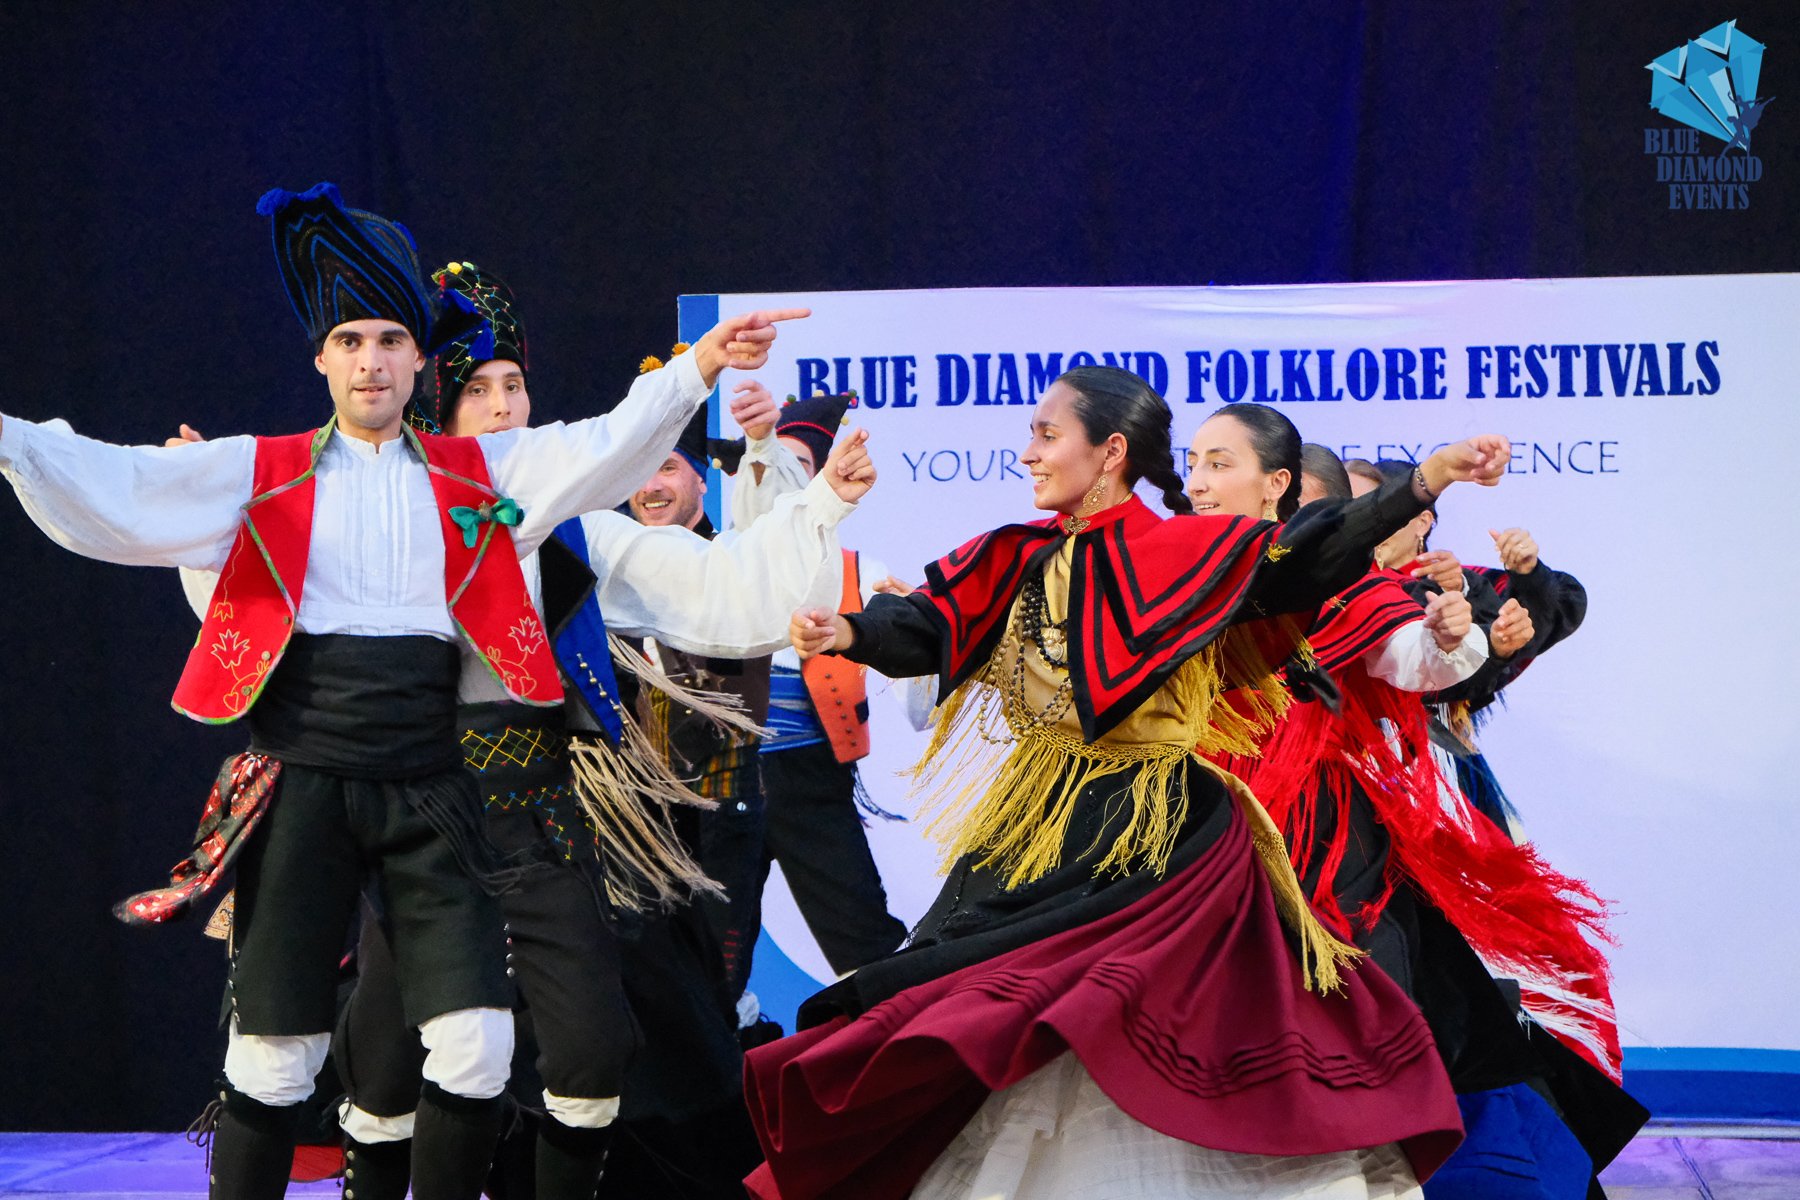 Folklore festival costa brava barcelona